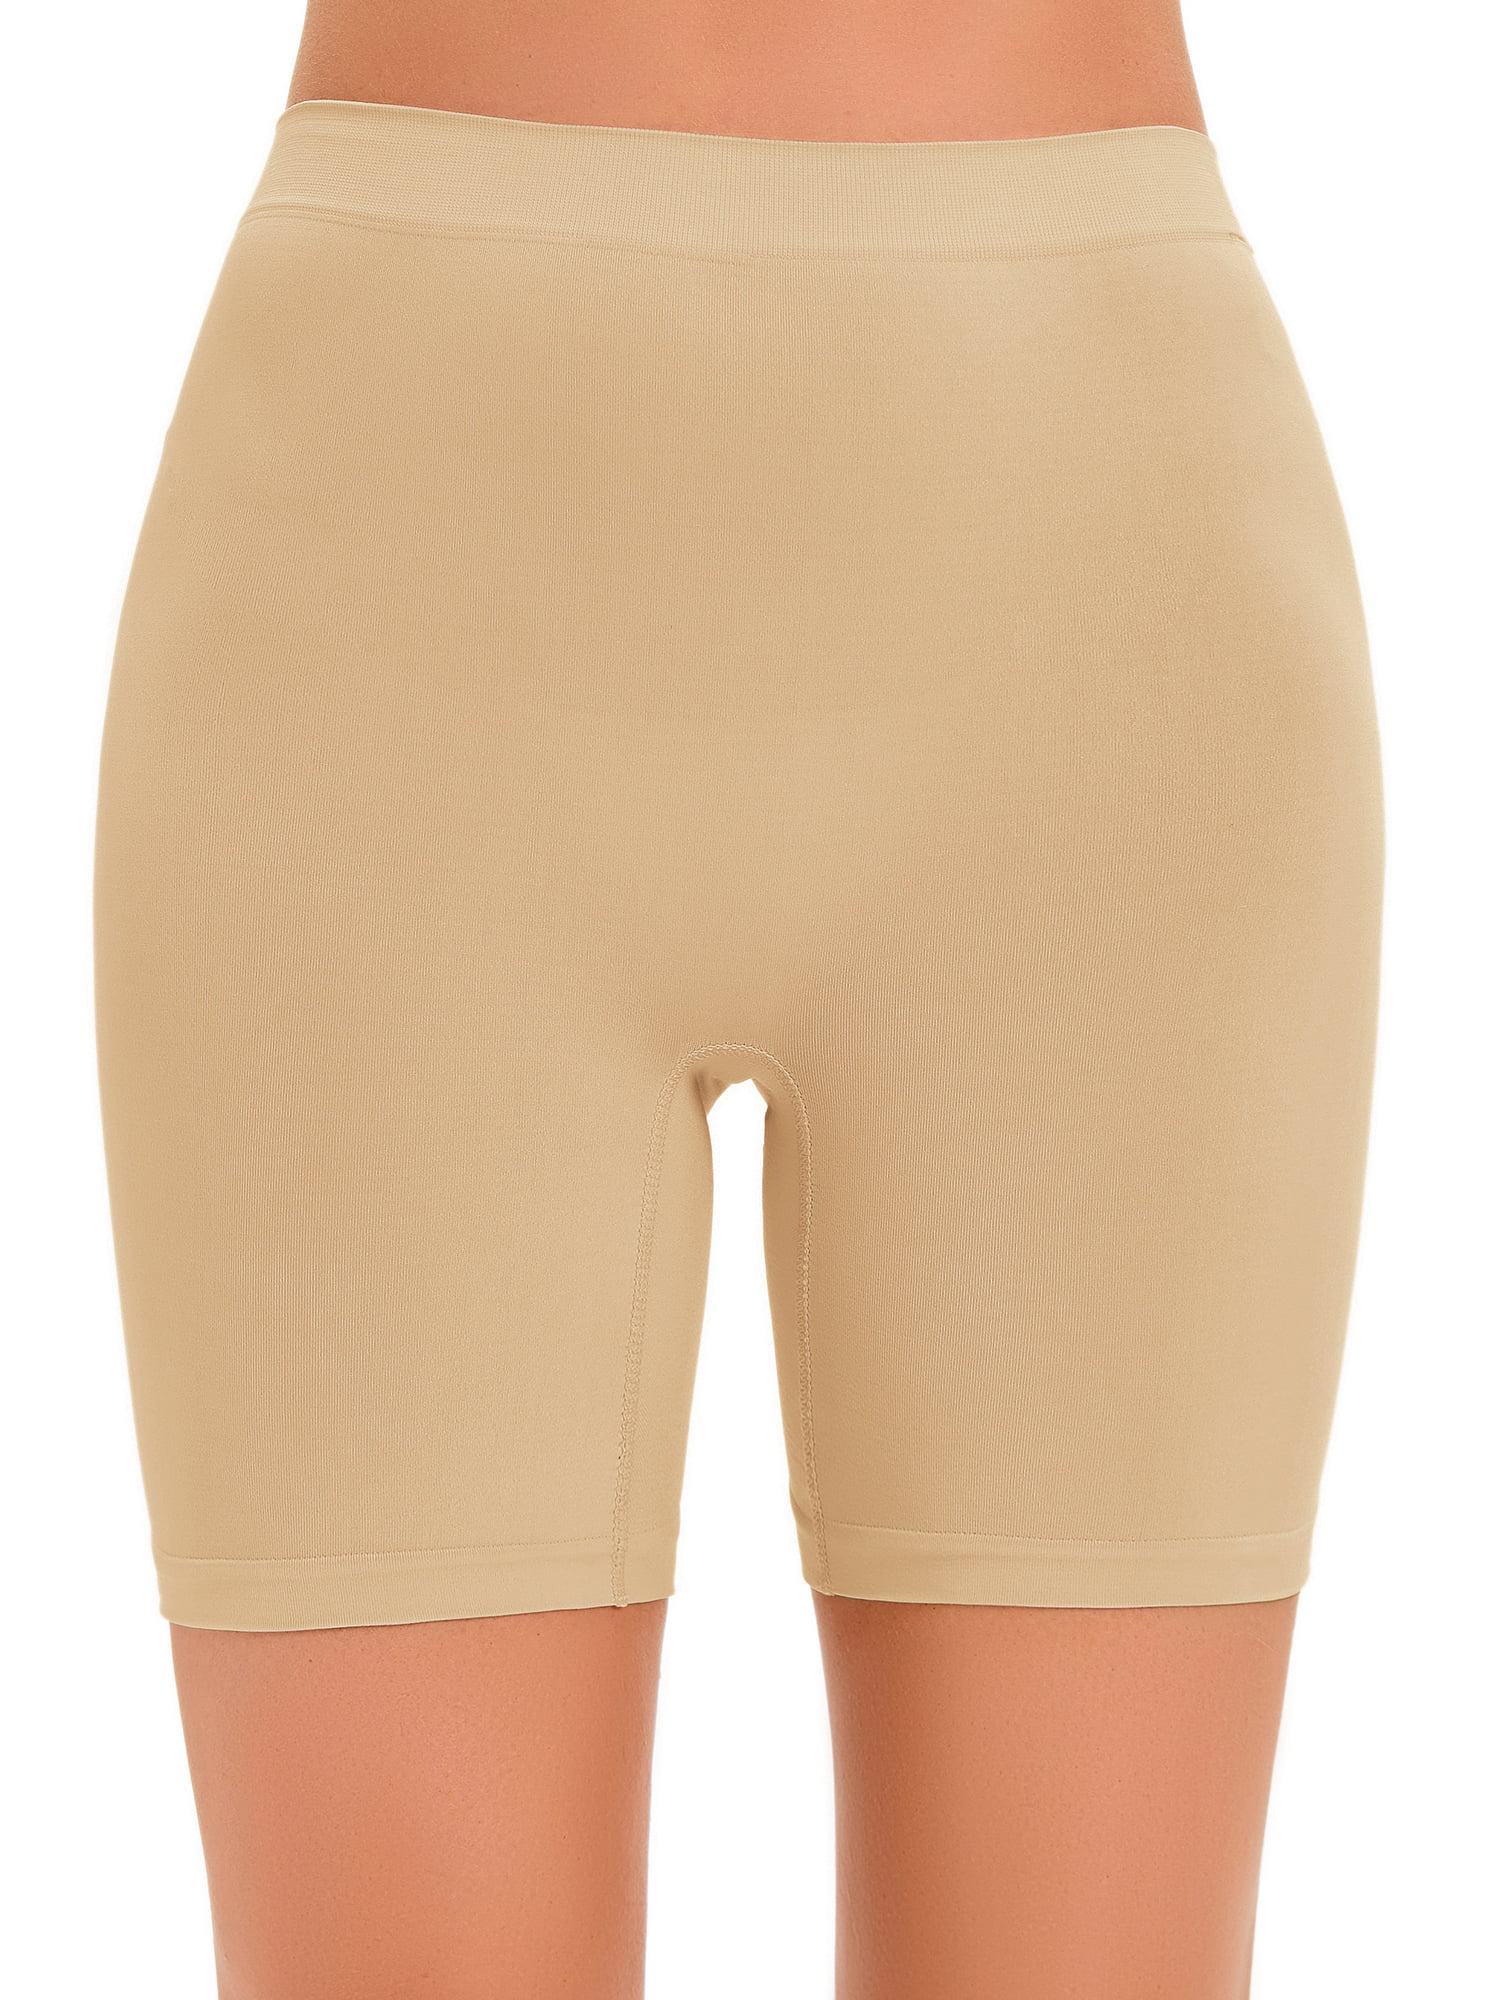 DODOING Tummy Control Panties Butt Lifter Shapewear that Hide Belly Fat  Stomach Shapewear 